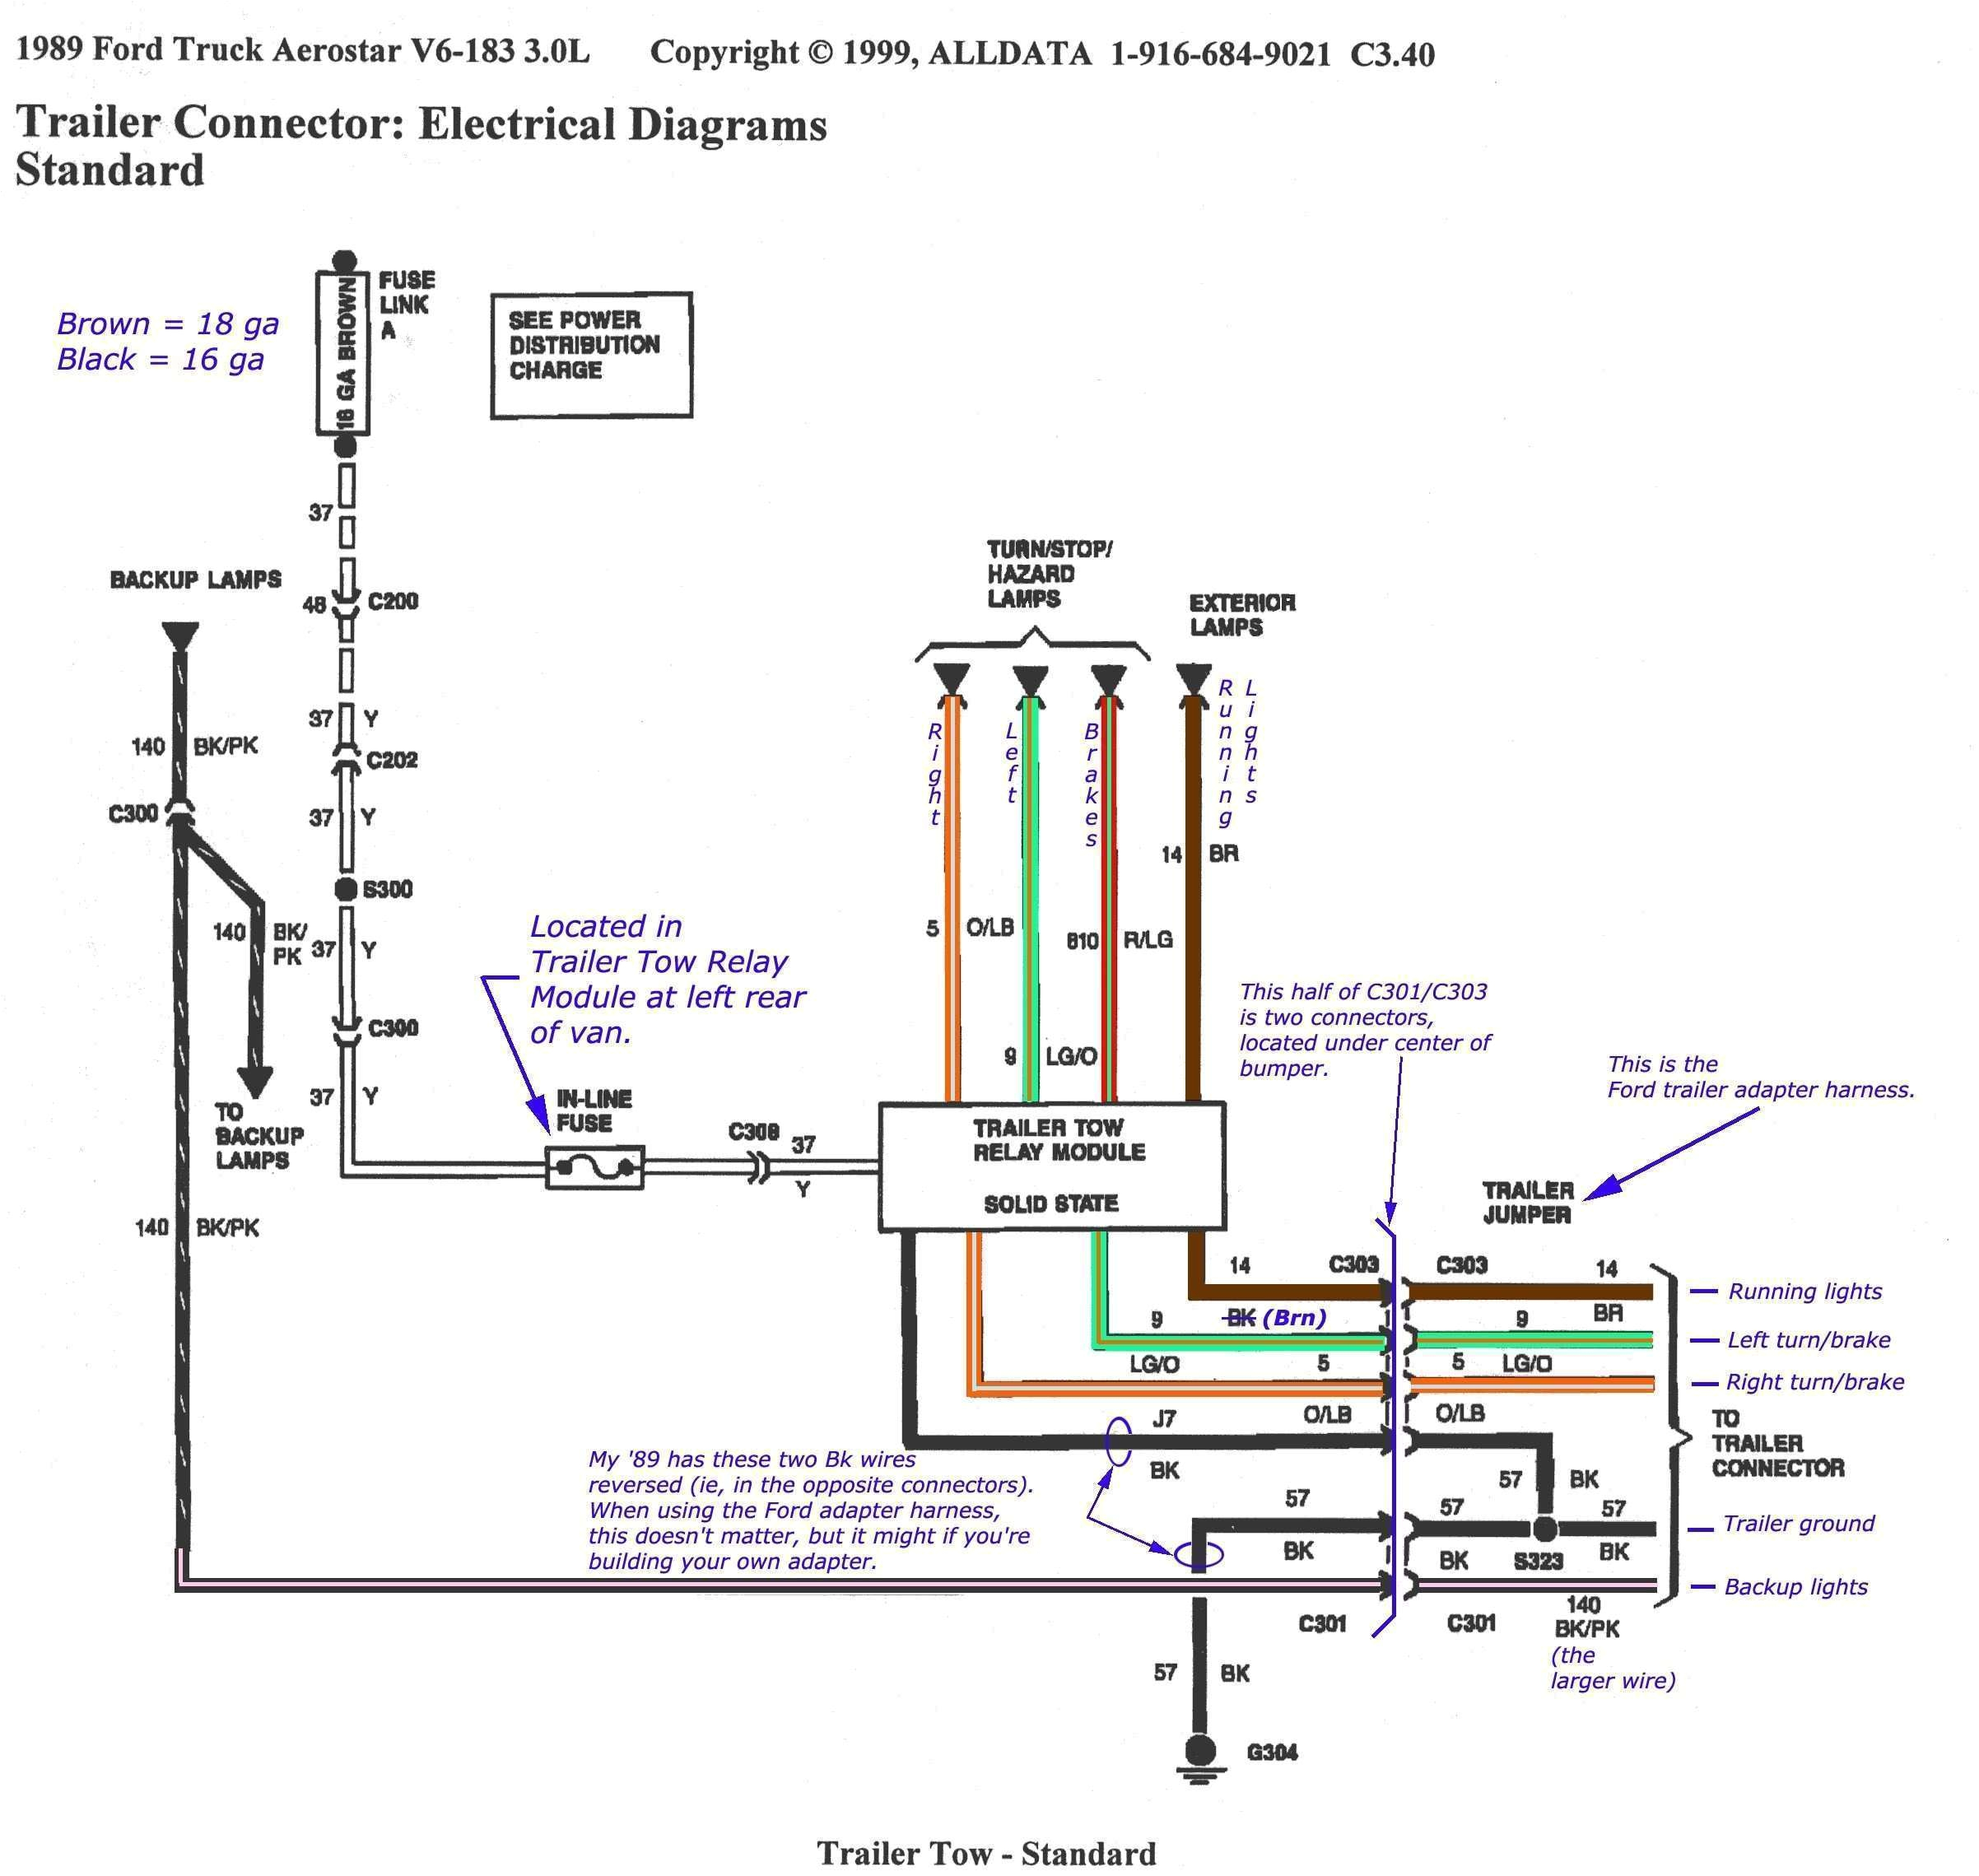 wiring diagram for trailer ke controller free download wiring pilot ke controller wiring diagram